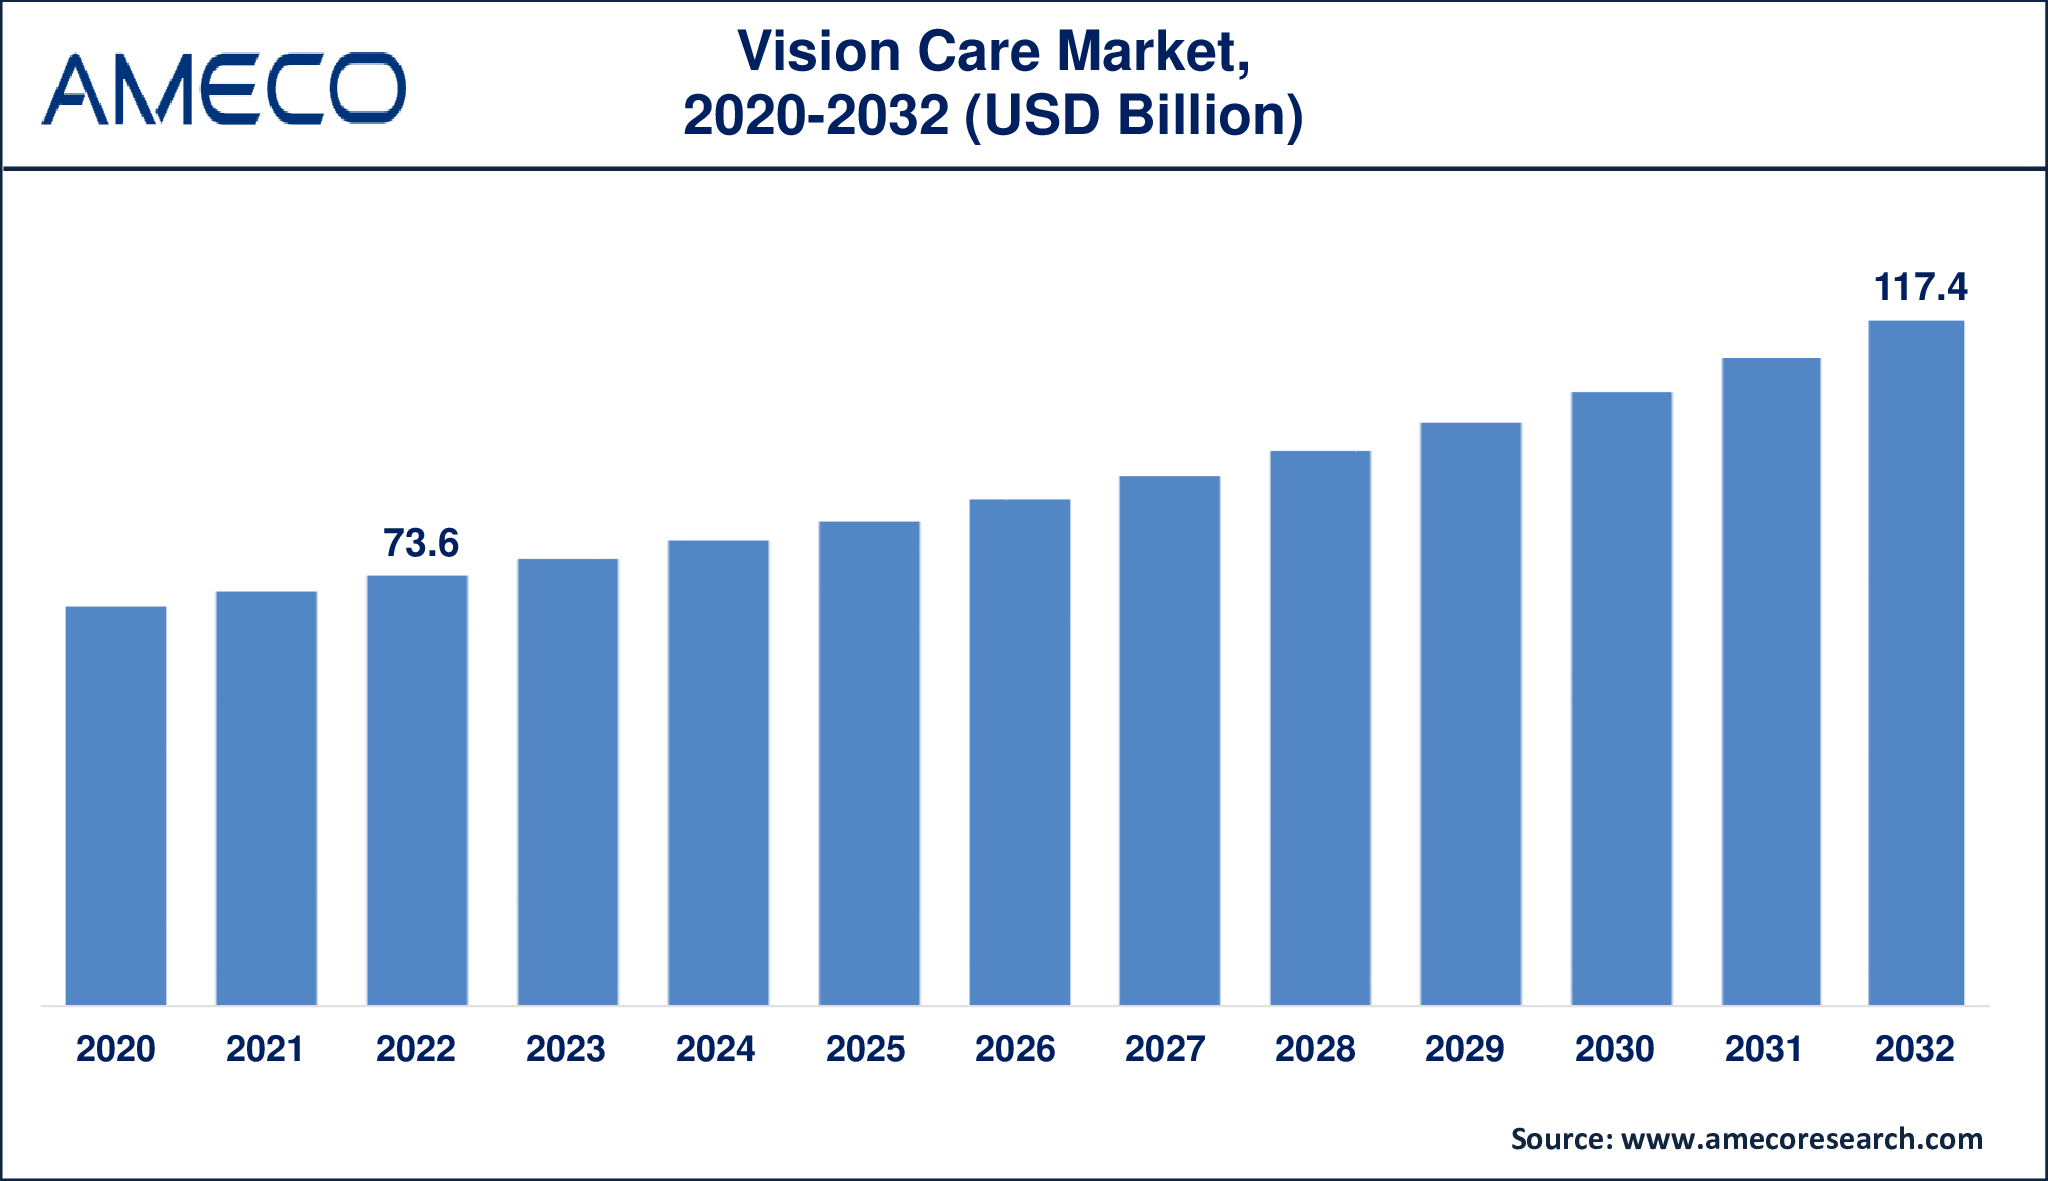 Vision Care Market Dynamics